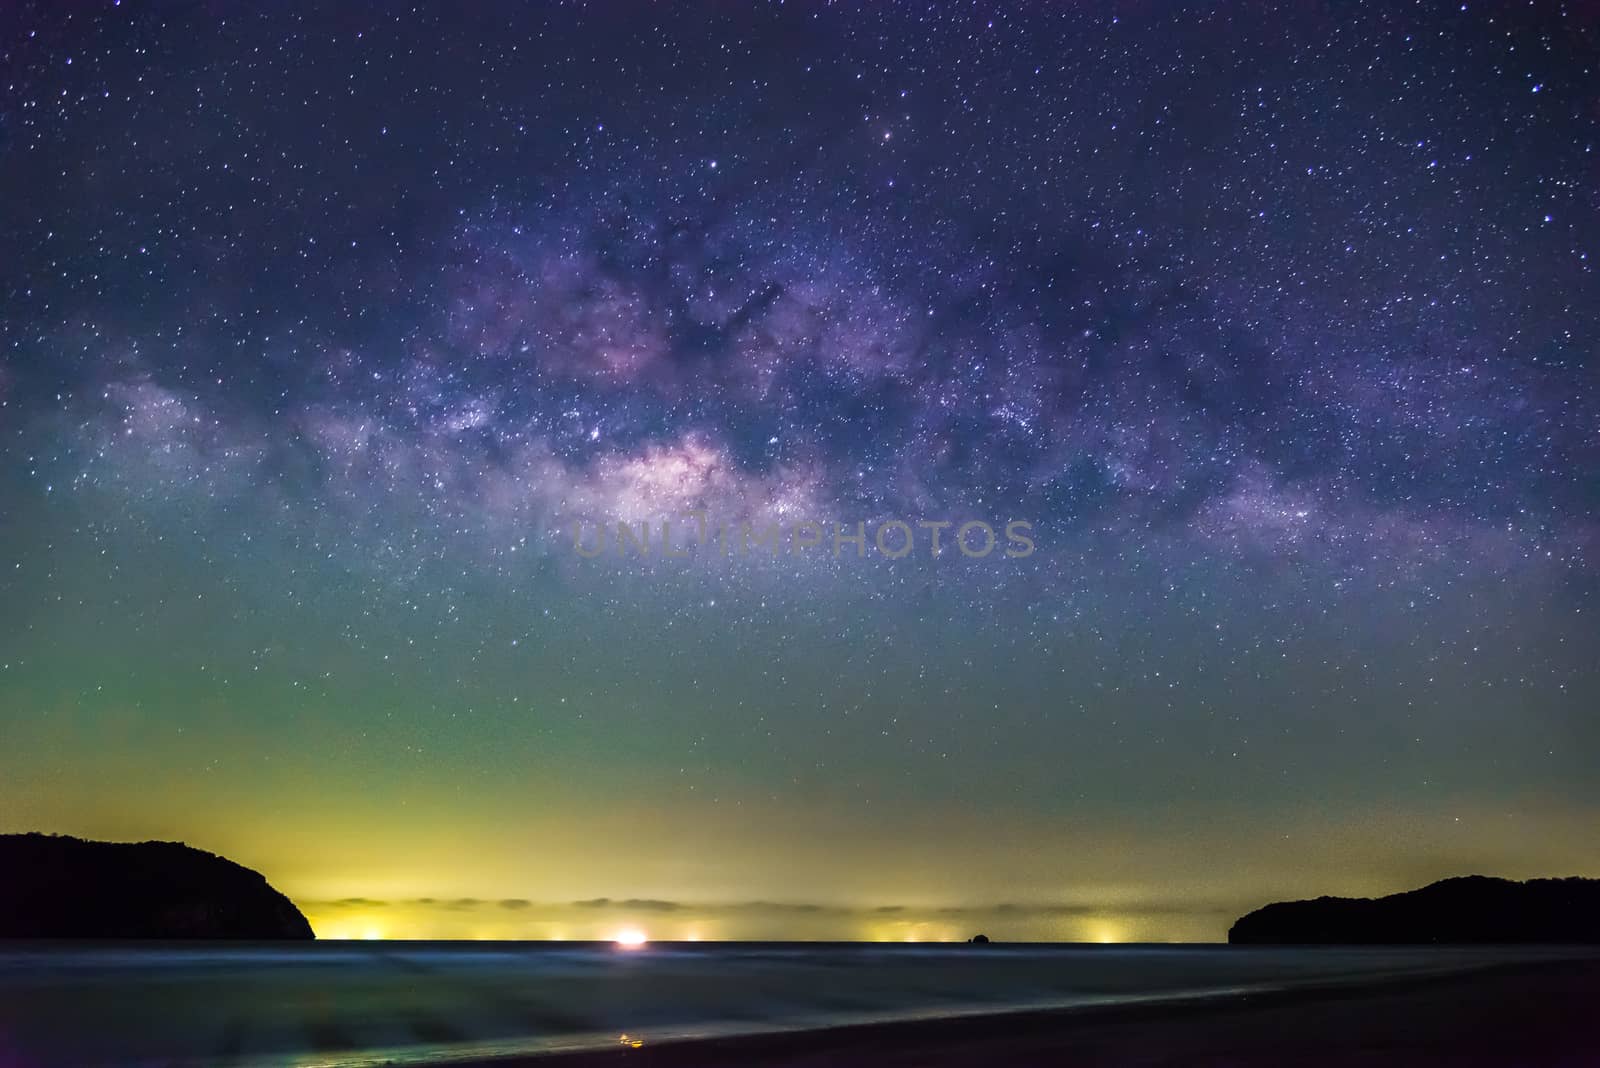 Milky Way Galaxy over Thailand at Night.